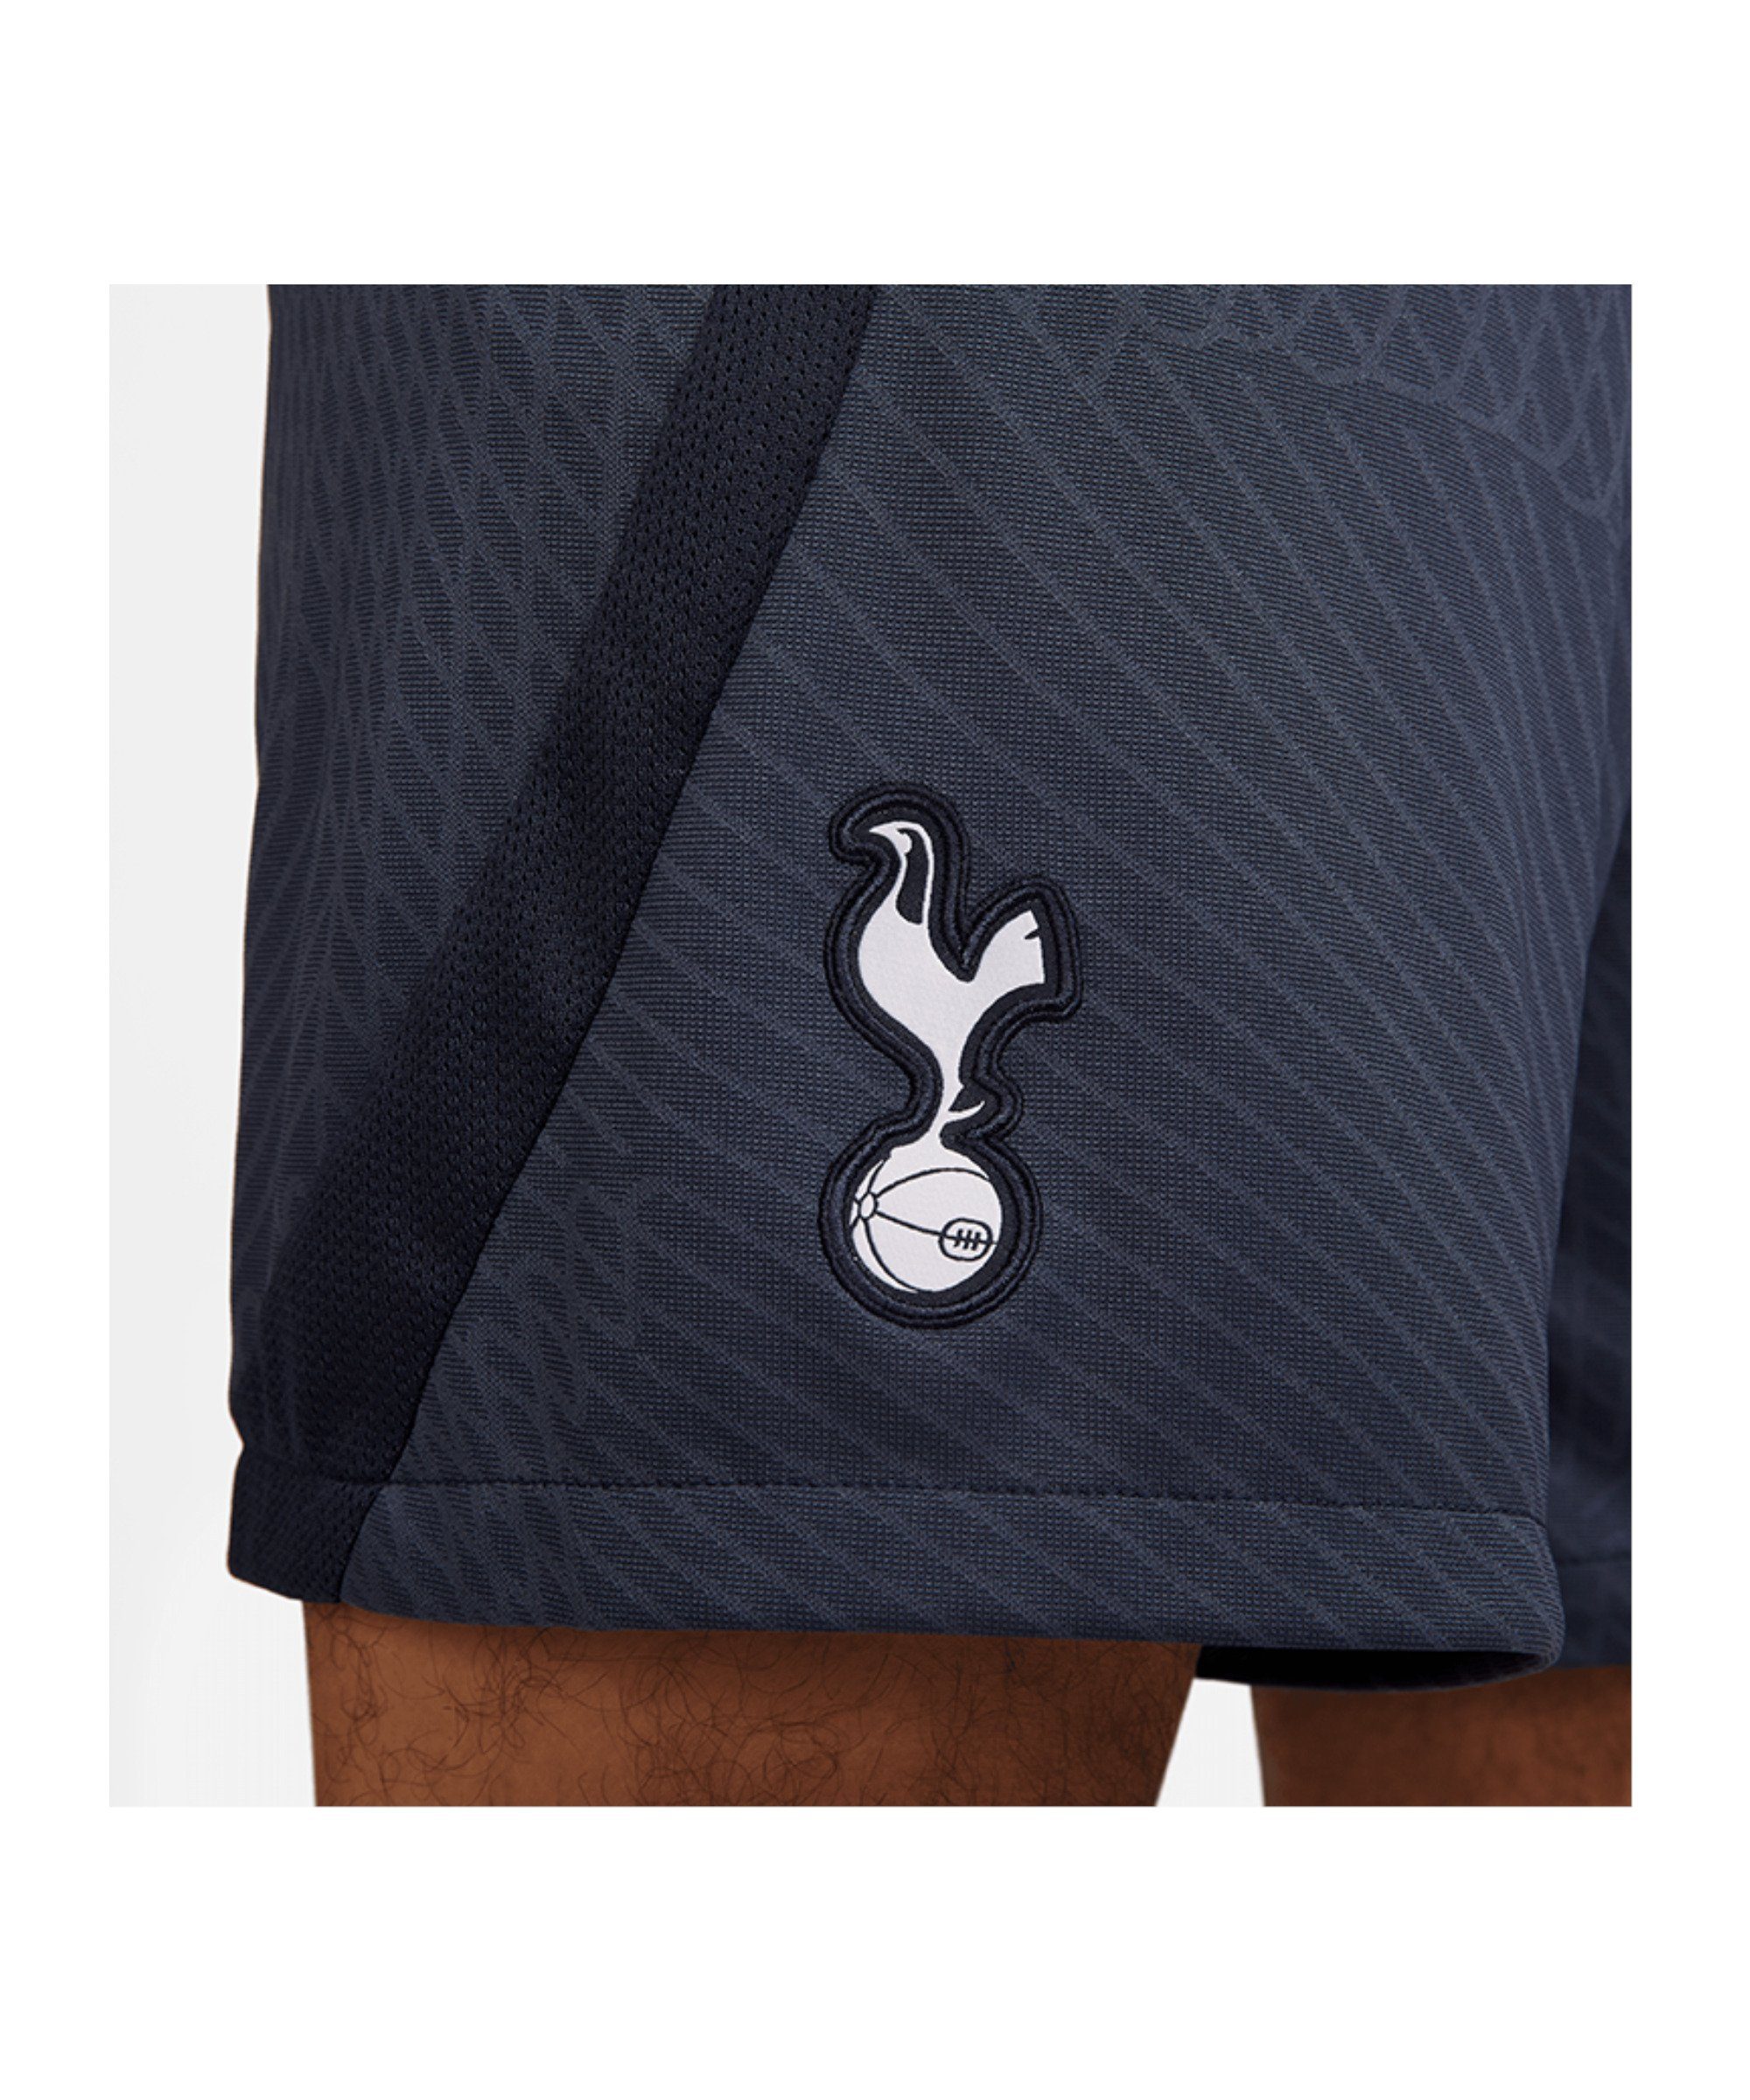 Nike Sporthose Hotspur Tottenham Short